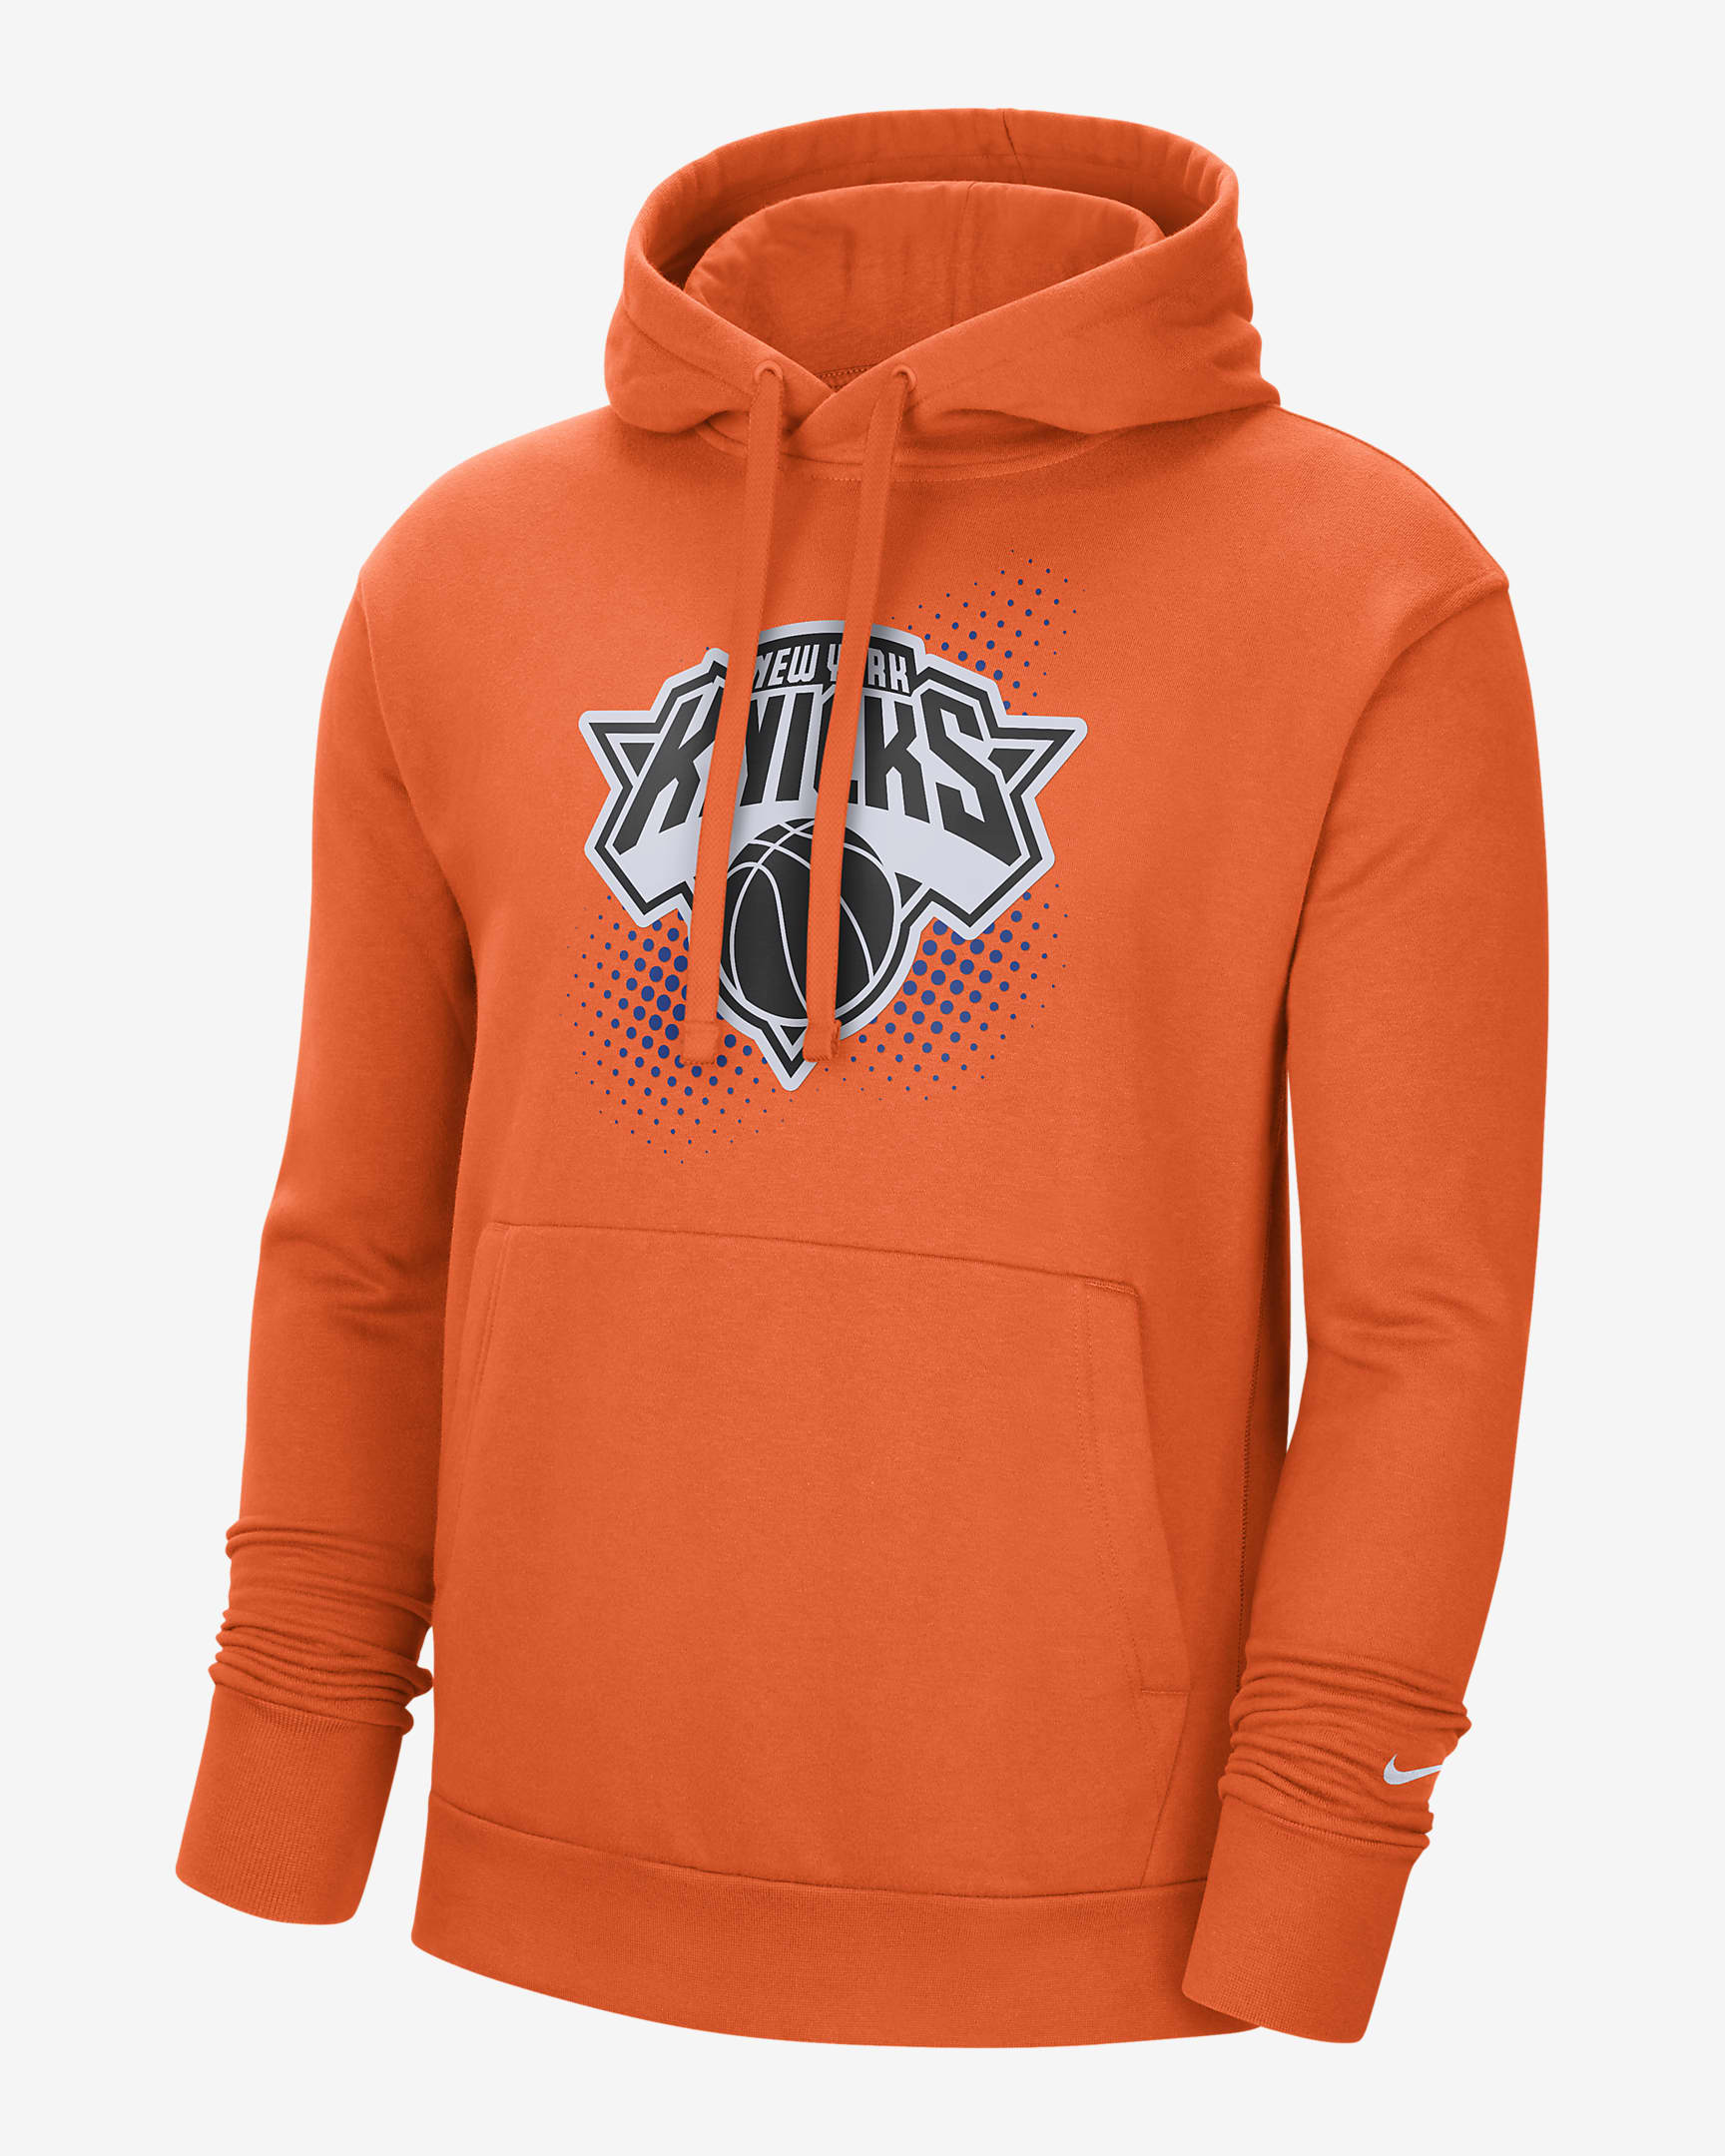 The NBA hoodie jackets by Nike